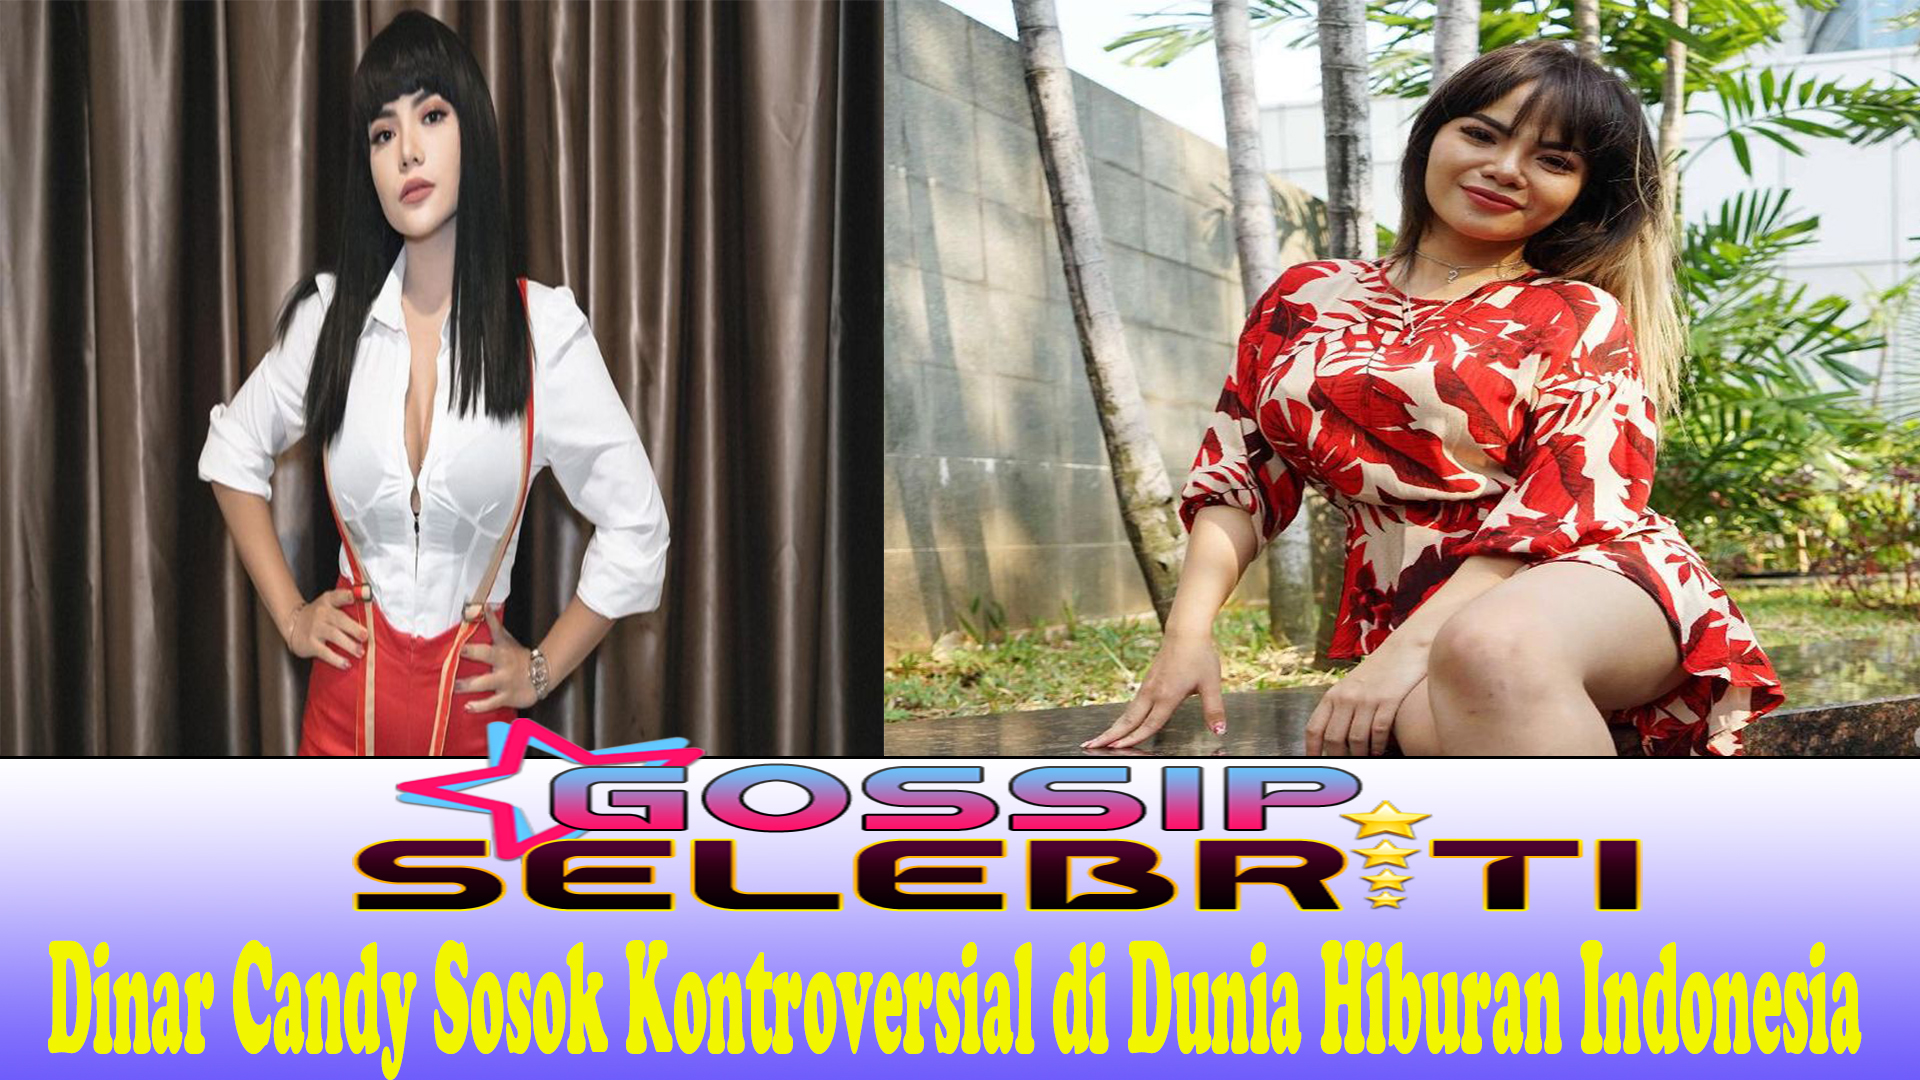 Dinar Candy Sosok Kontroversial di Dunia Hiburan Indonesia